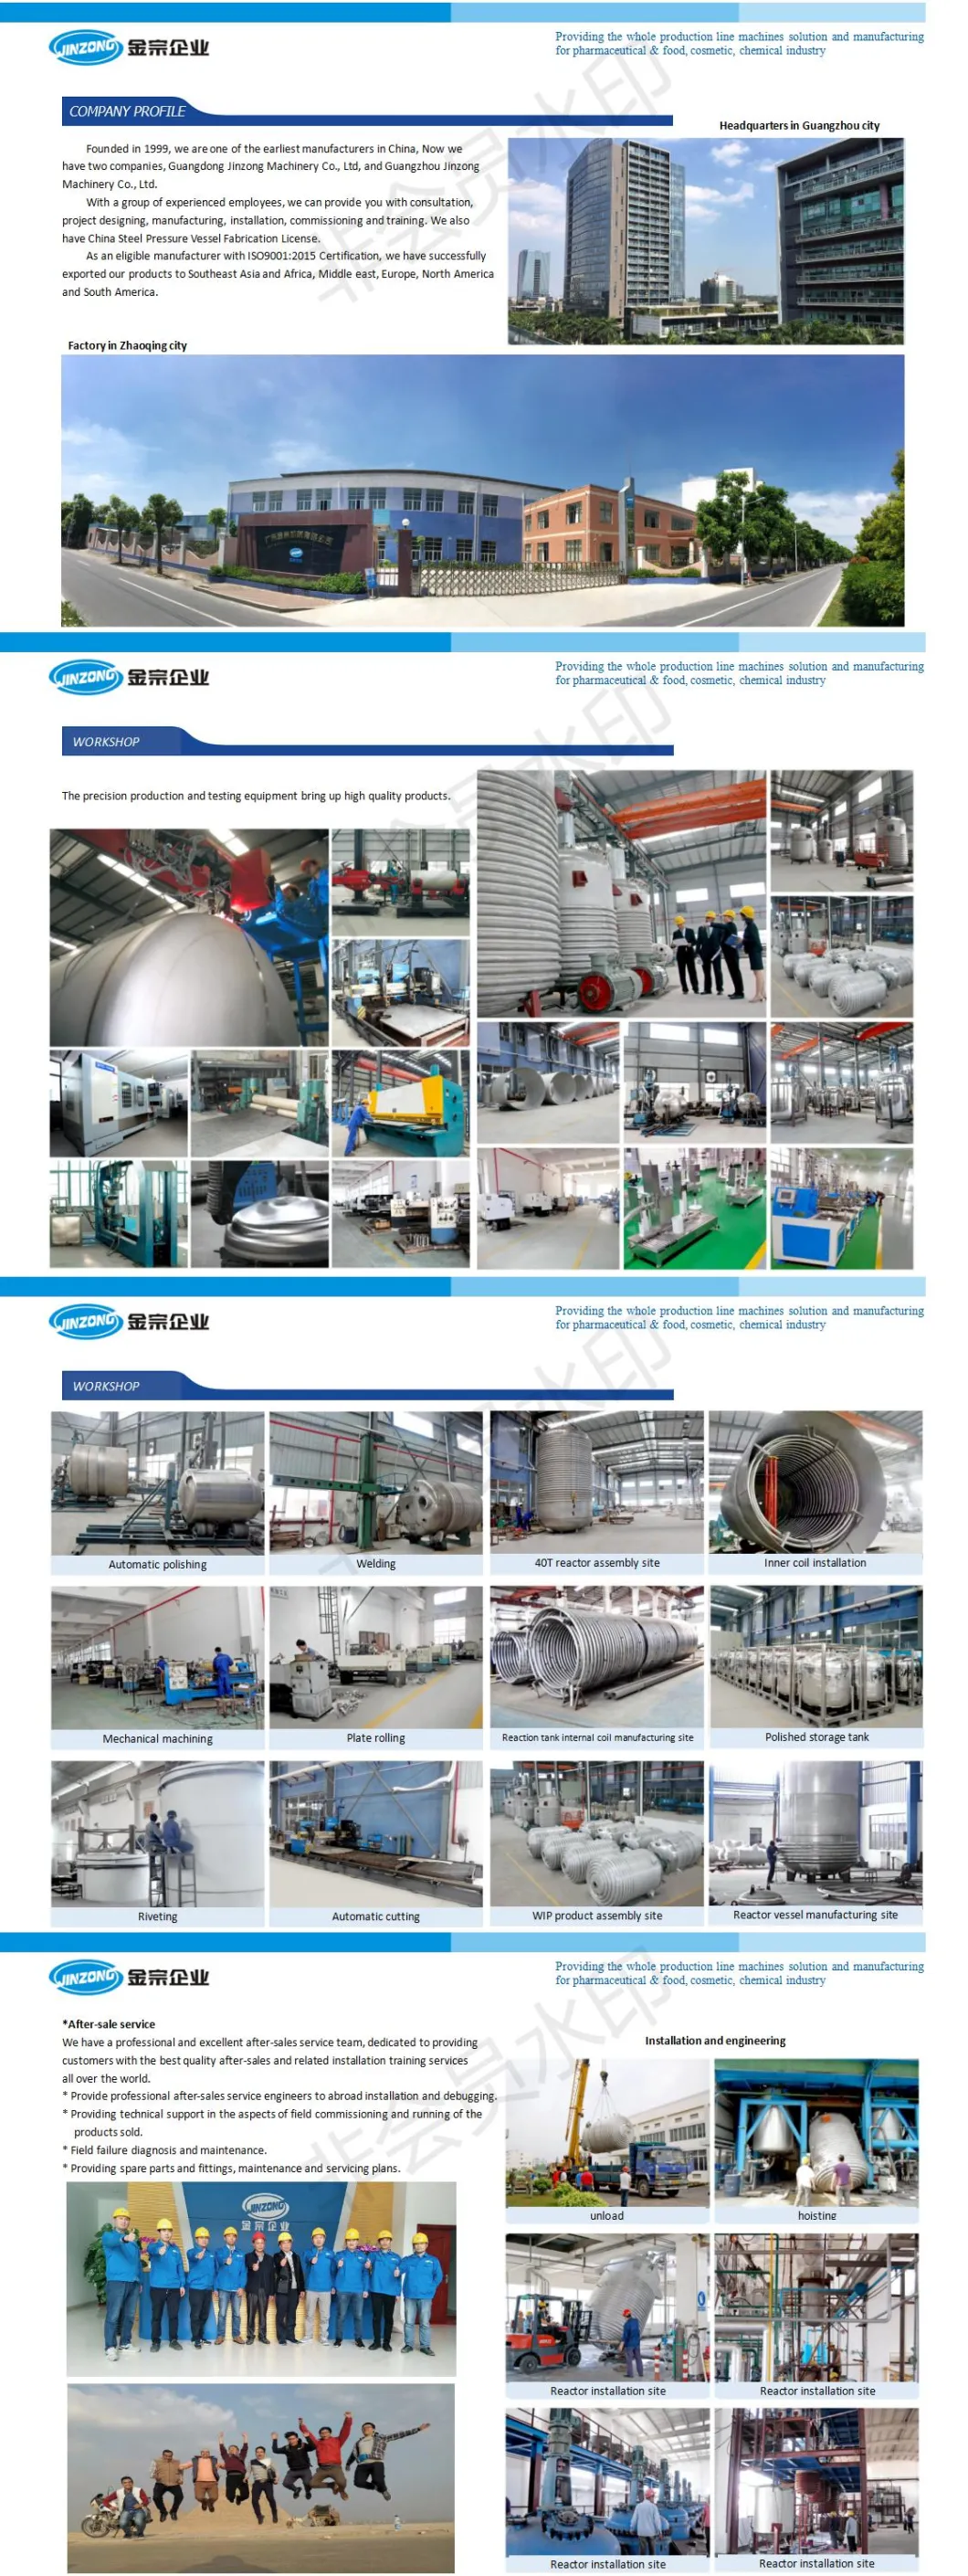 Fermentor Bioreactor for Large Scale Fermentation Production